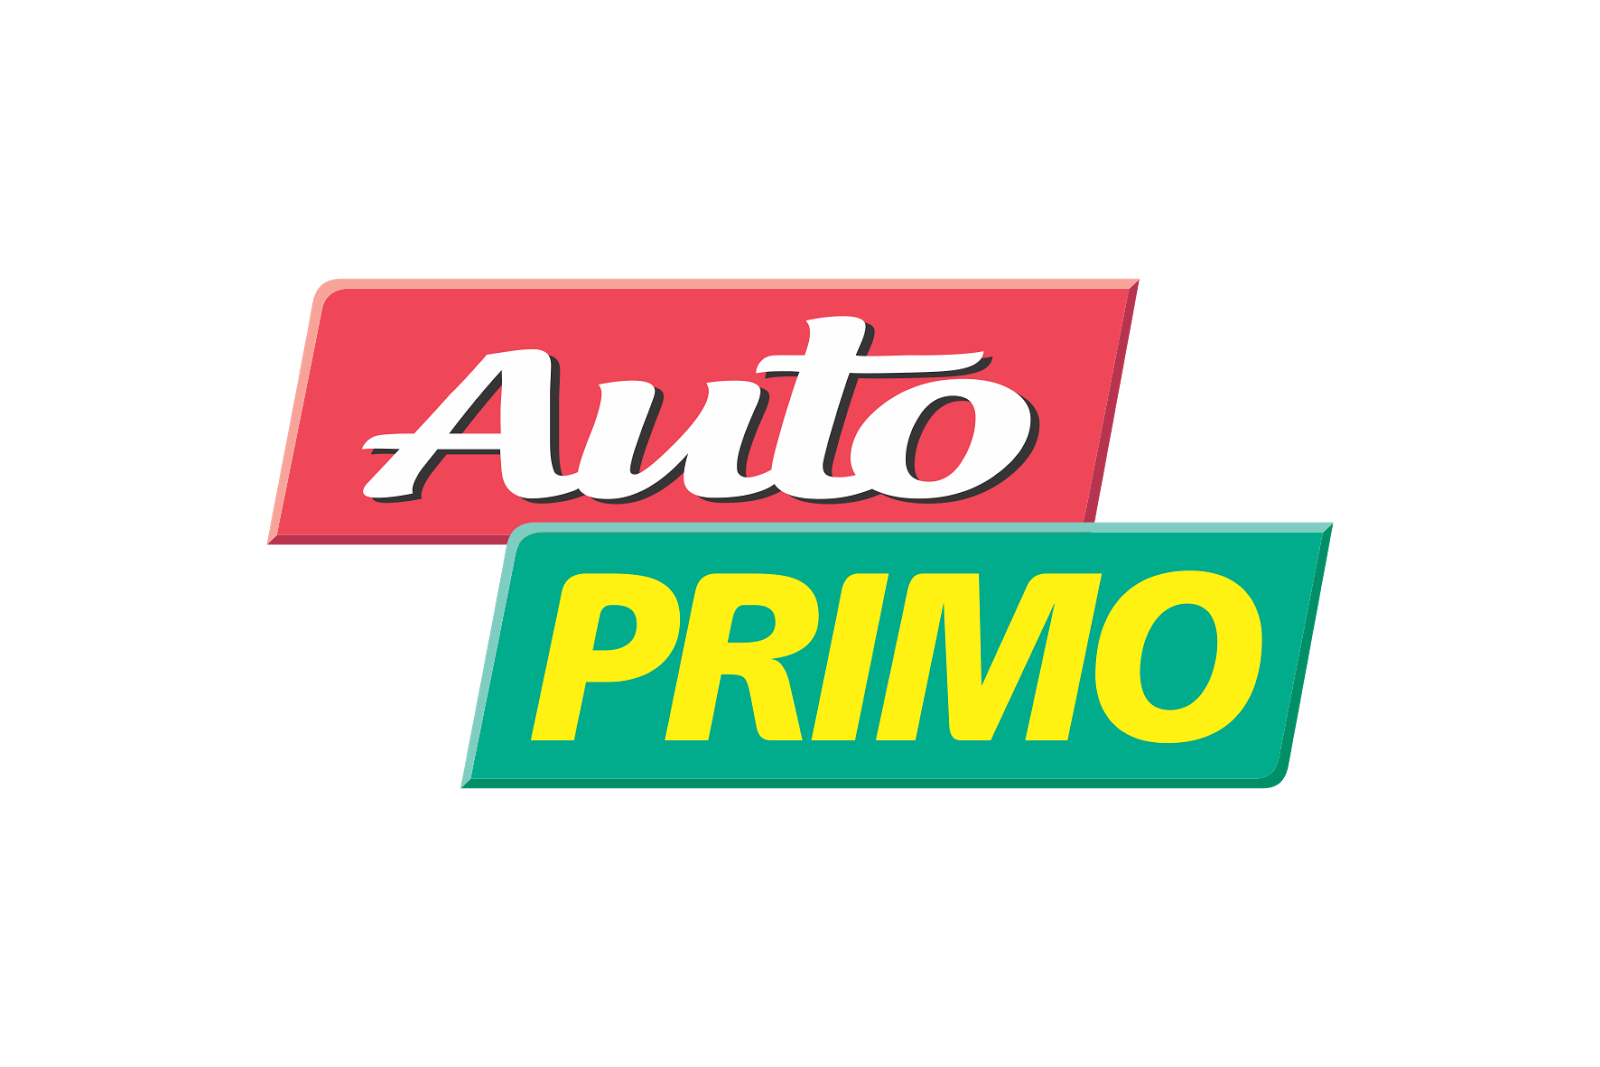 Autoprimo - JR Auto logo